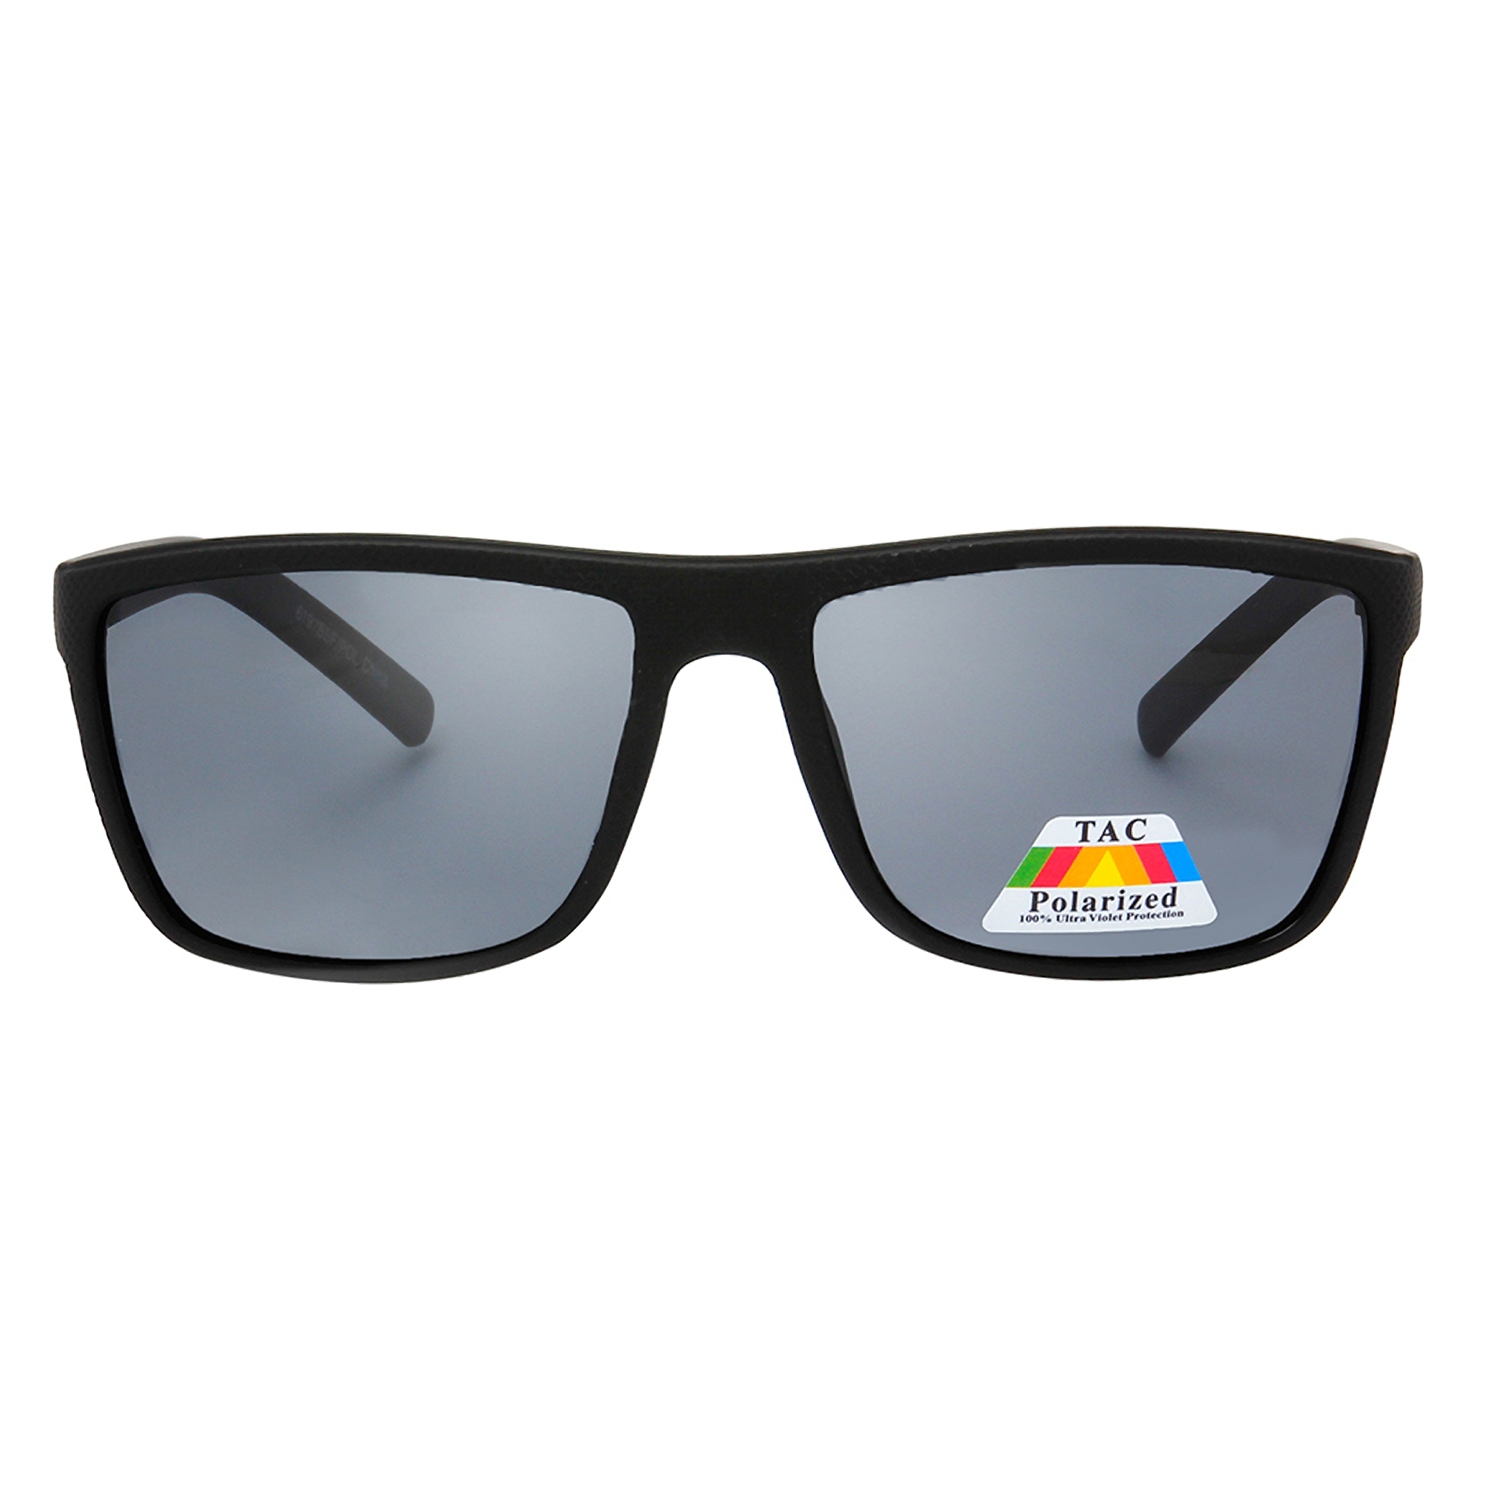 Men's Model 197 Designer Fashion Polarized Sunglasses - image 3 of 3